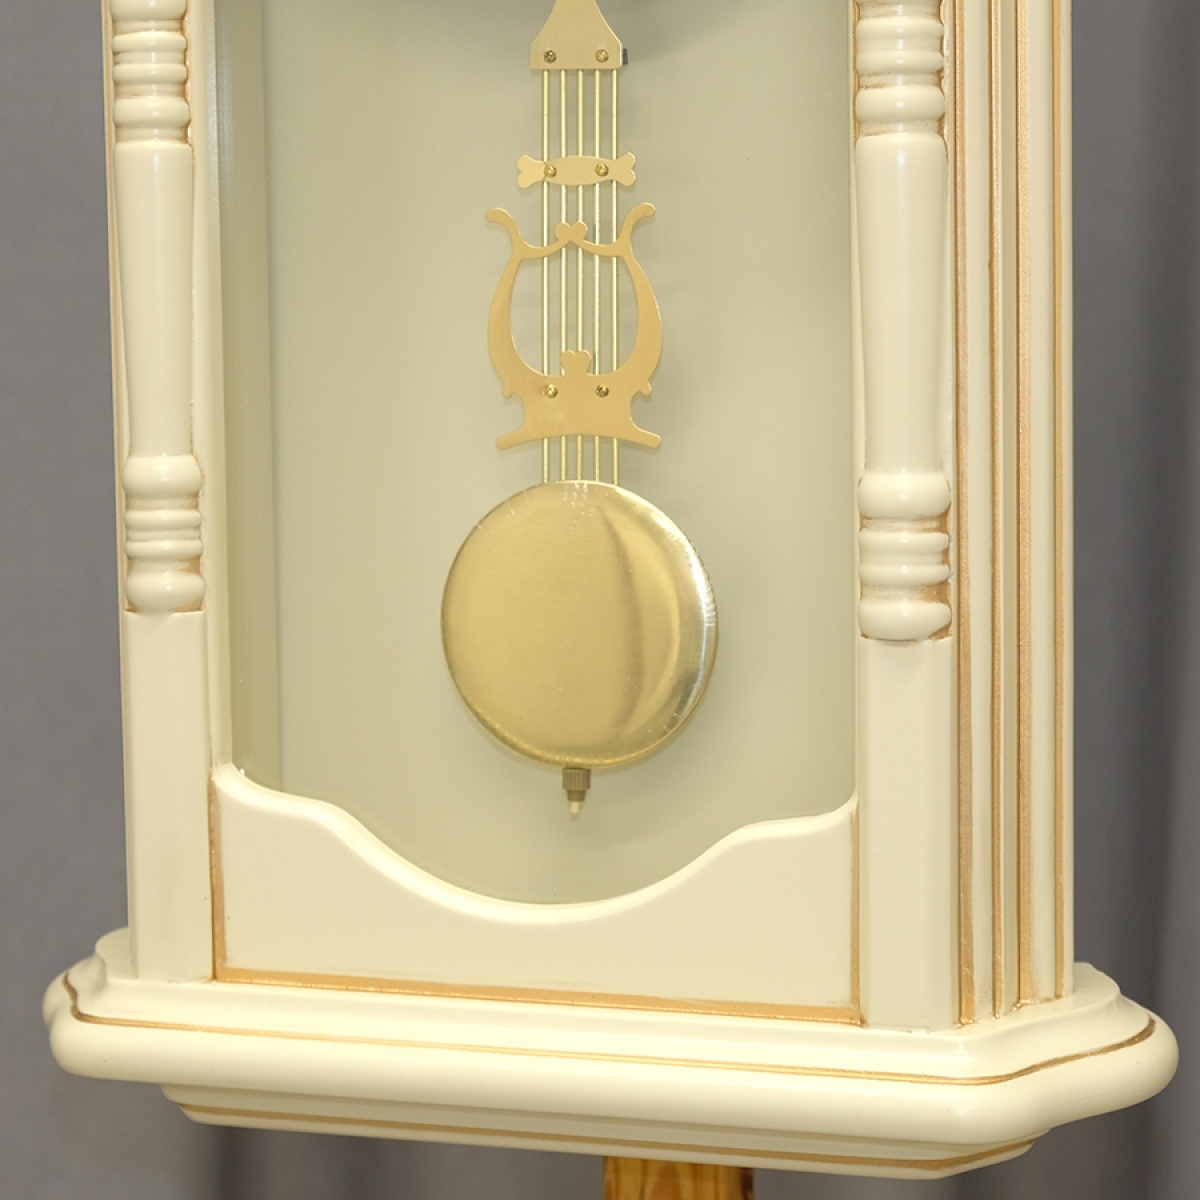 Настенные часы Columbus Co-1890-PG-Iv с маятником и боем